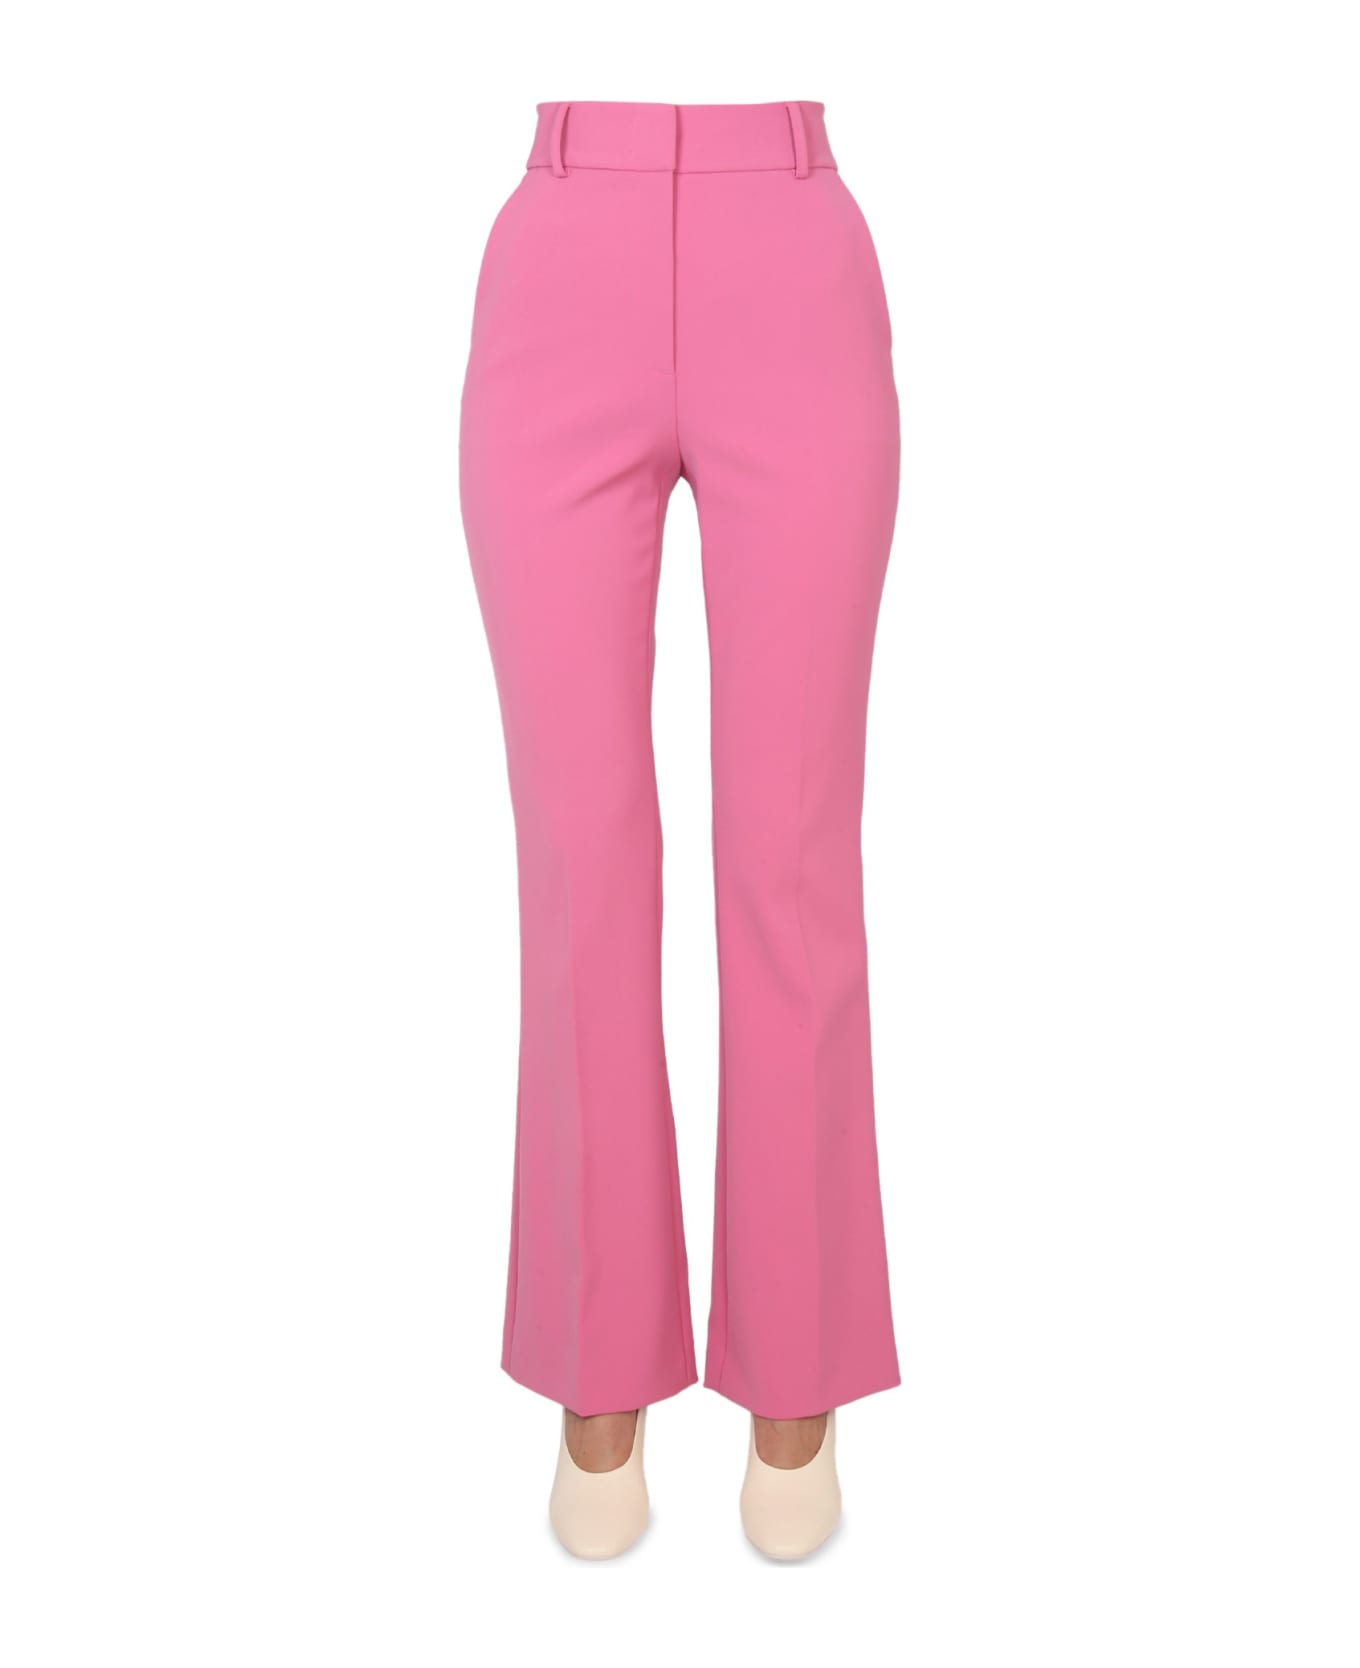 Boutique Moschino Cady Pants - ROSA